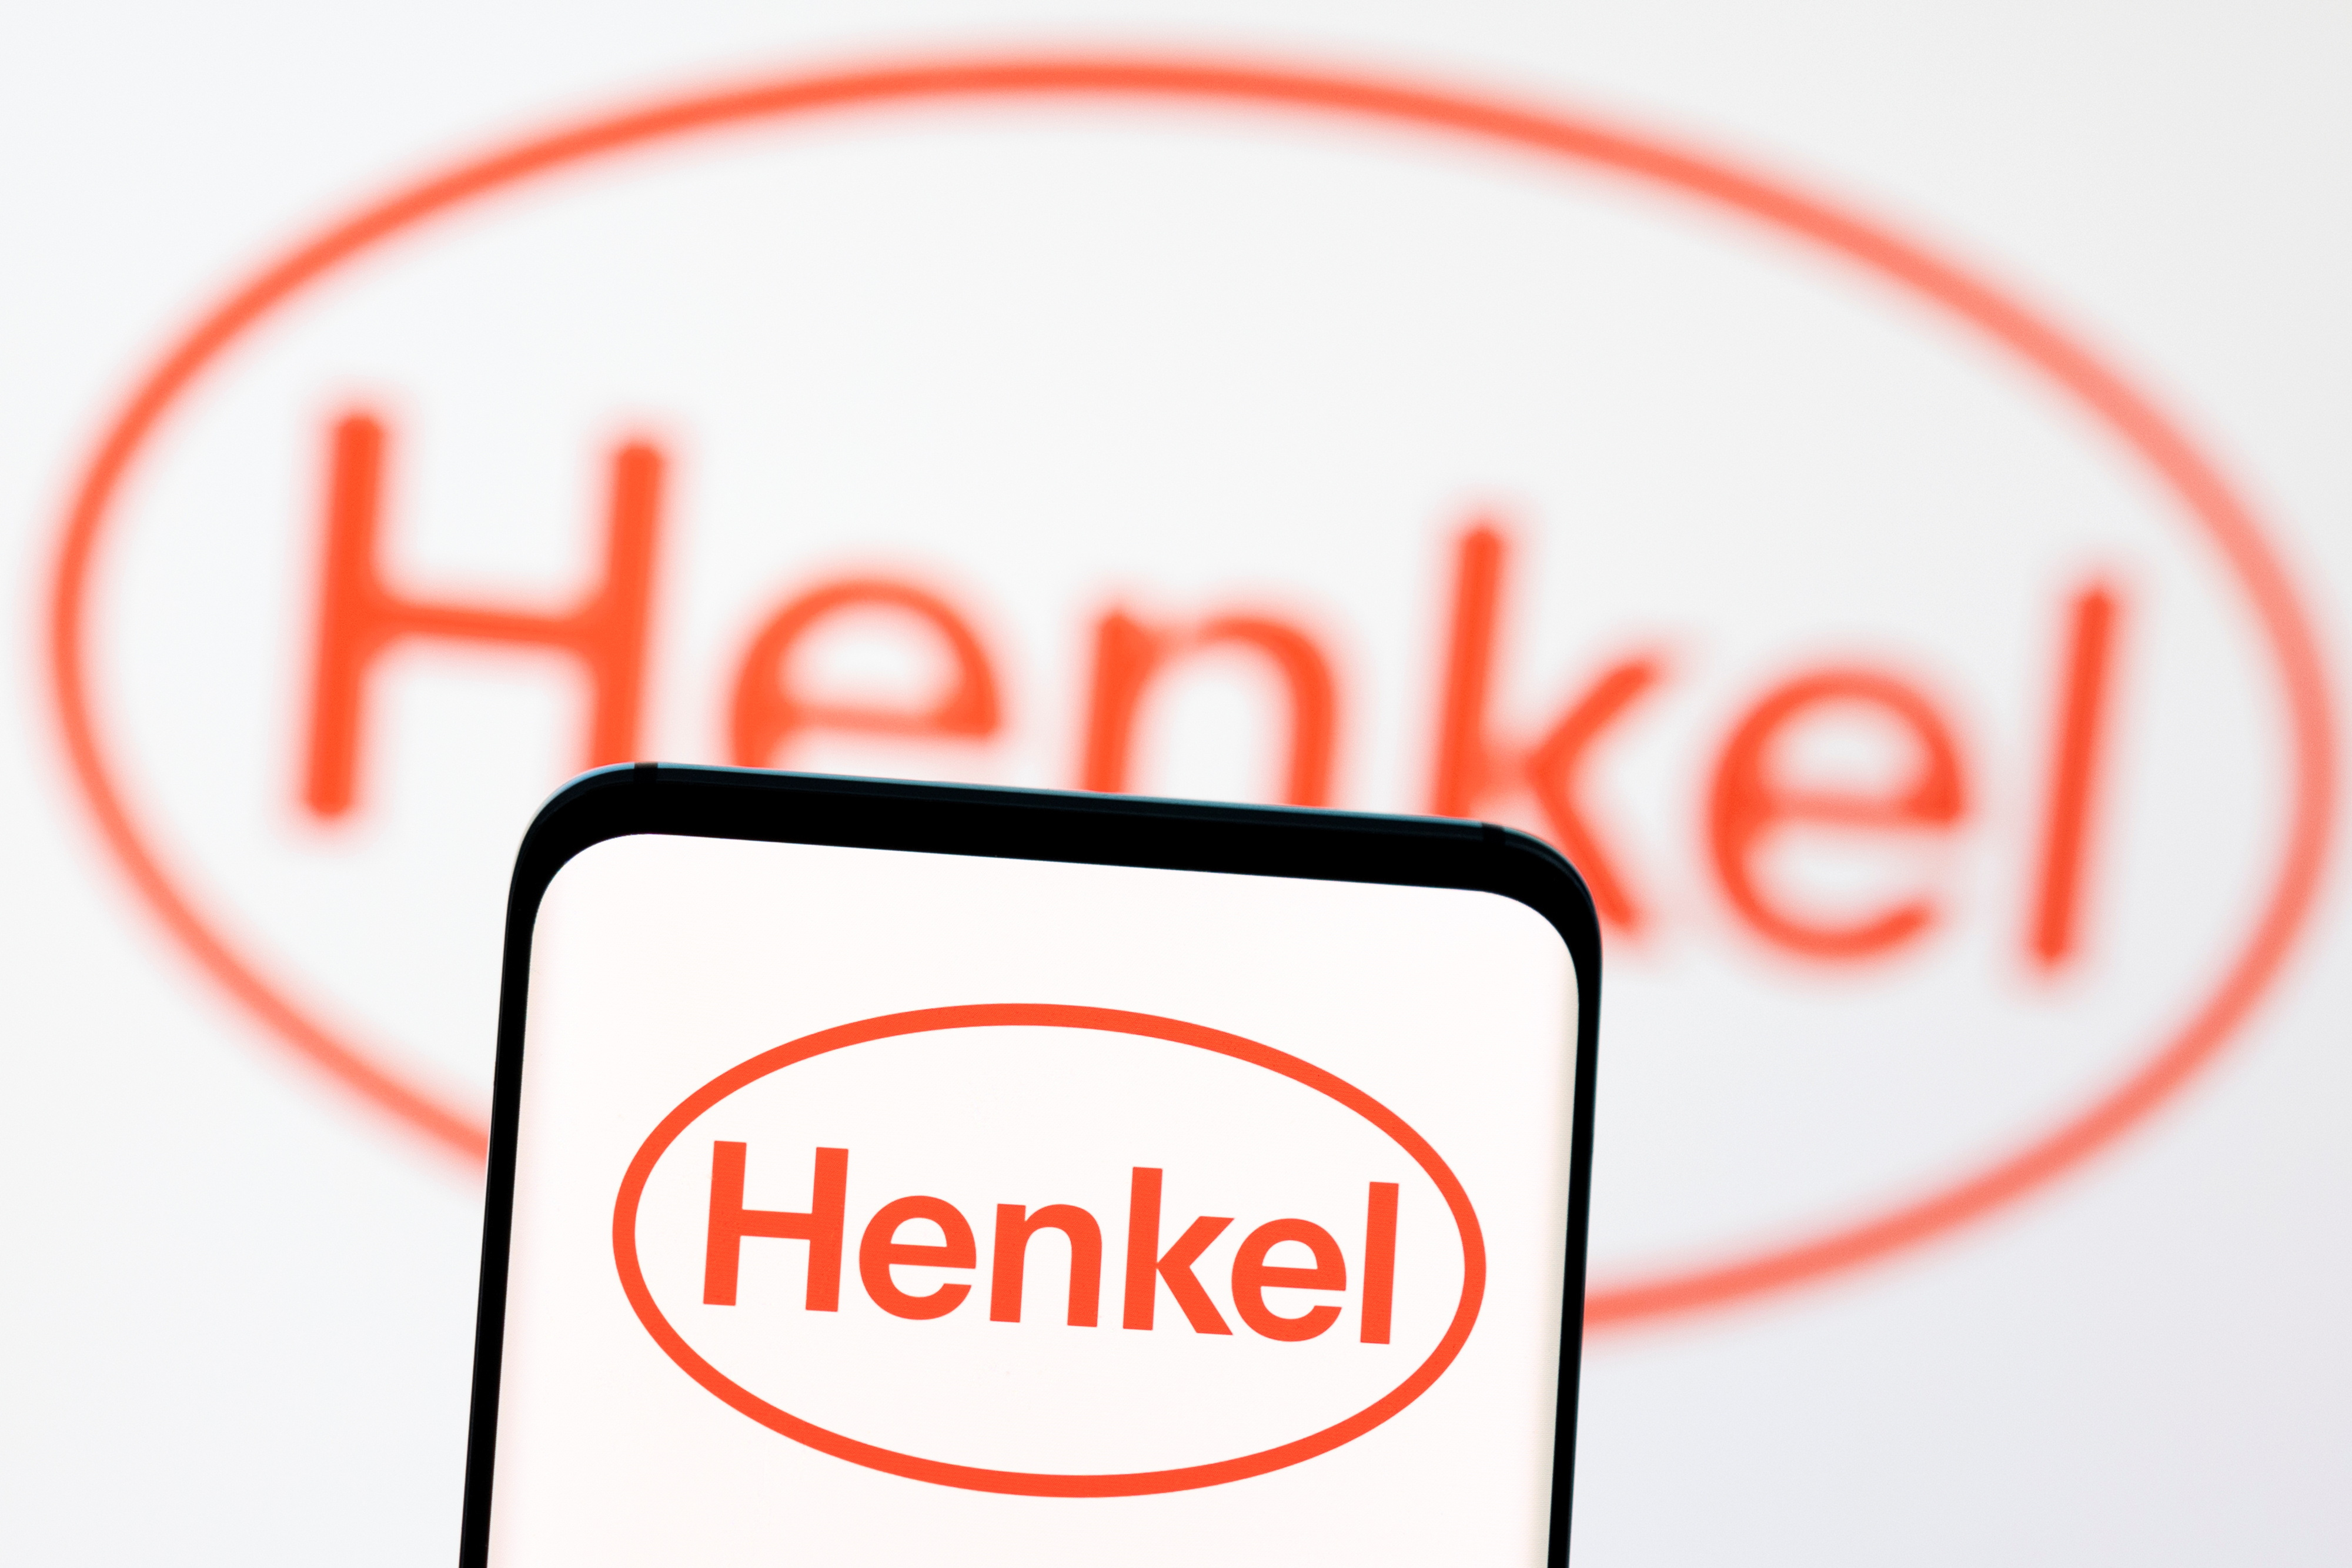 Illustration shows Henkel logo